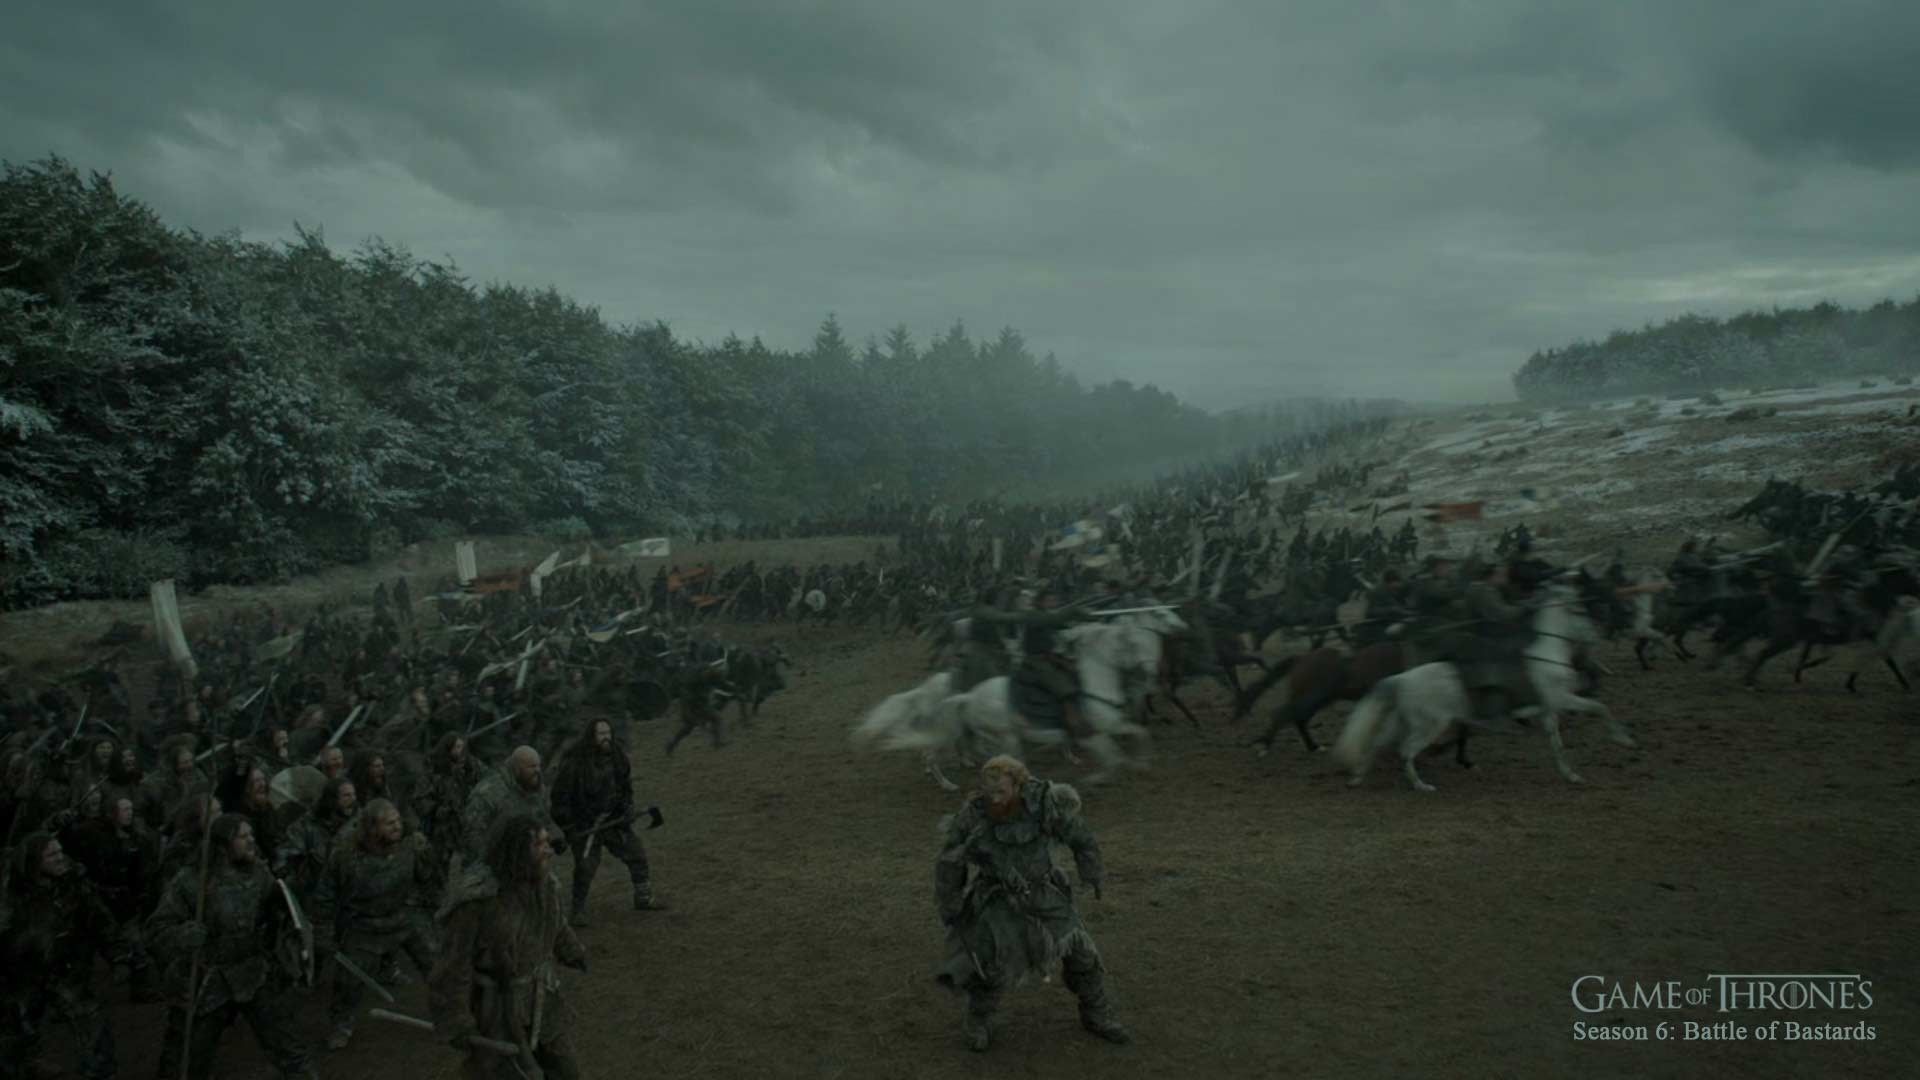 Game of Thrones Battle of Bastards, Alan Lam